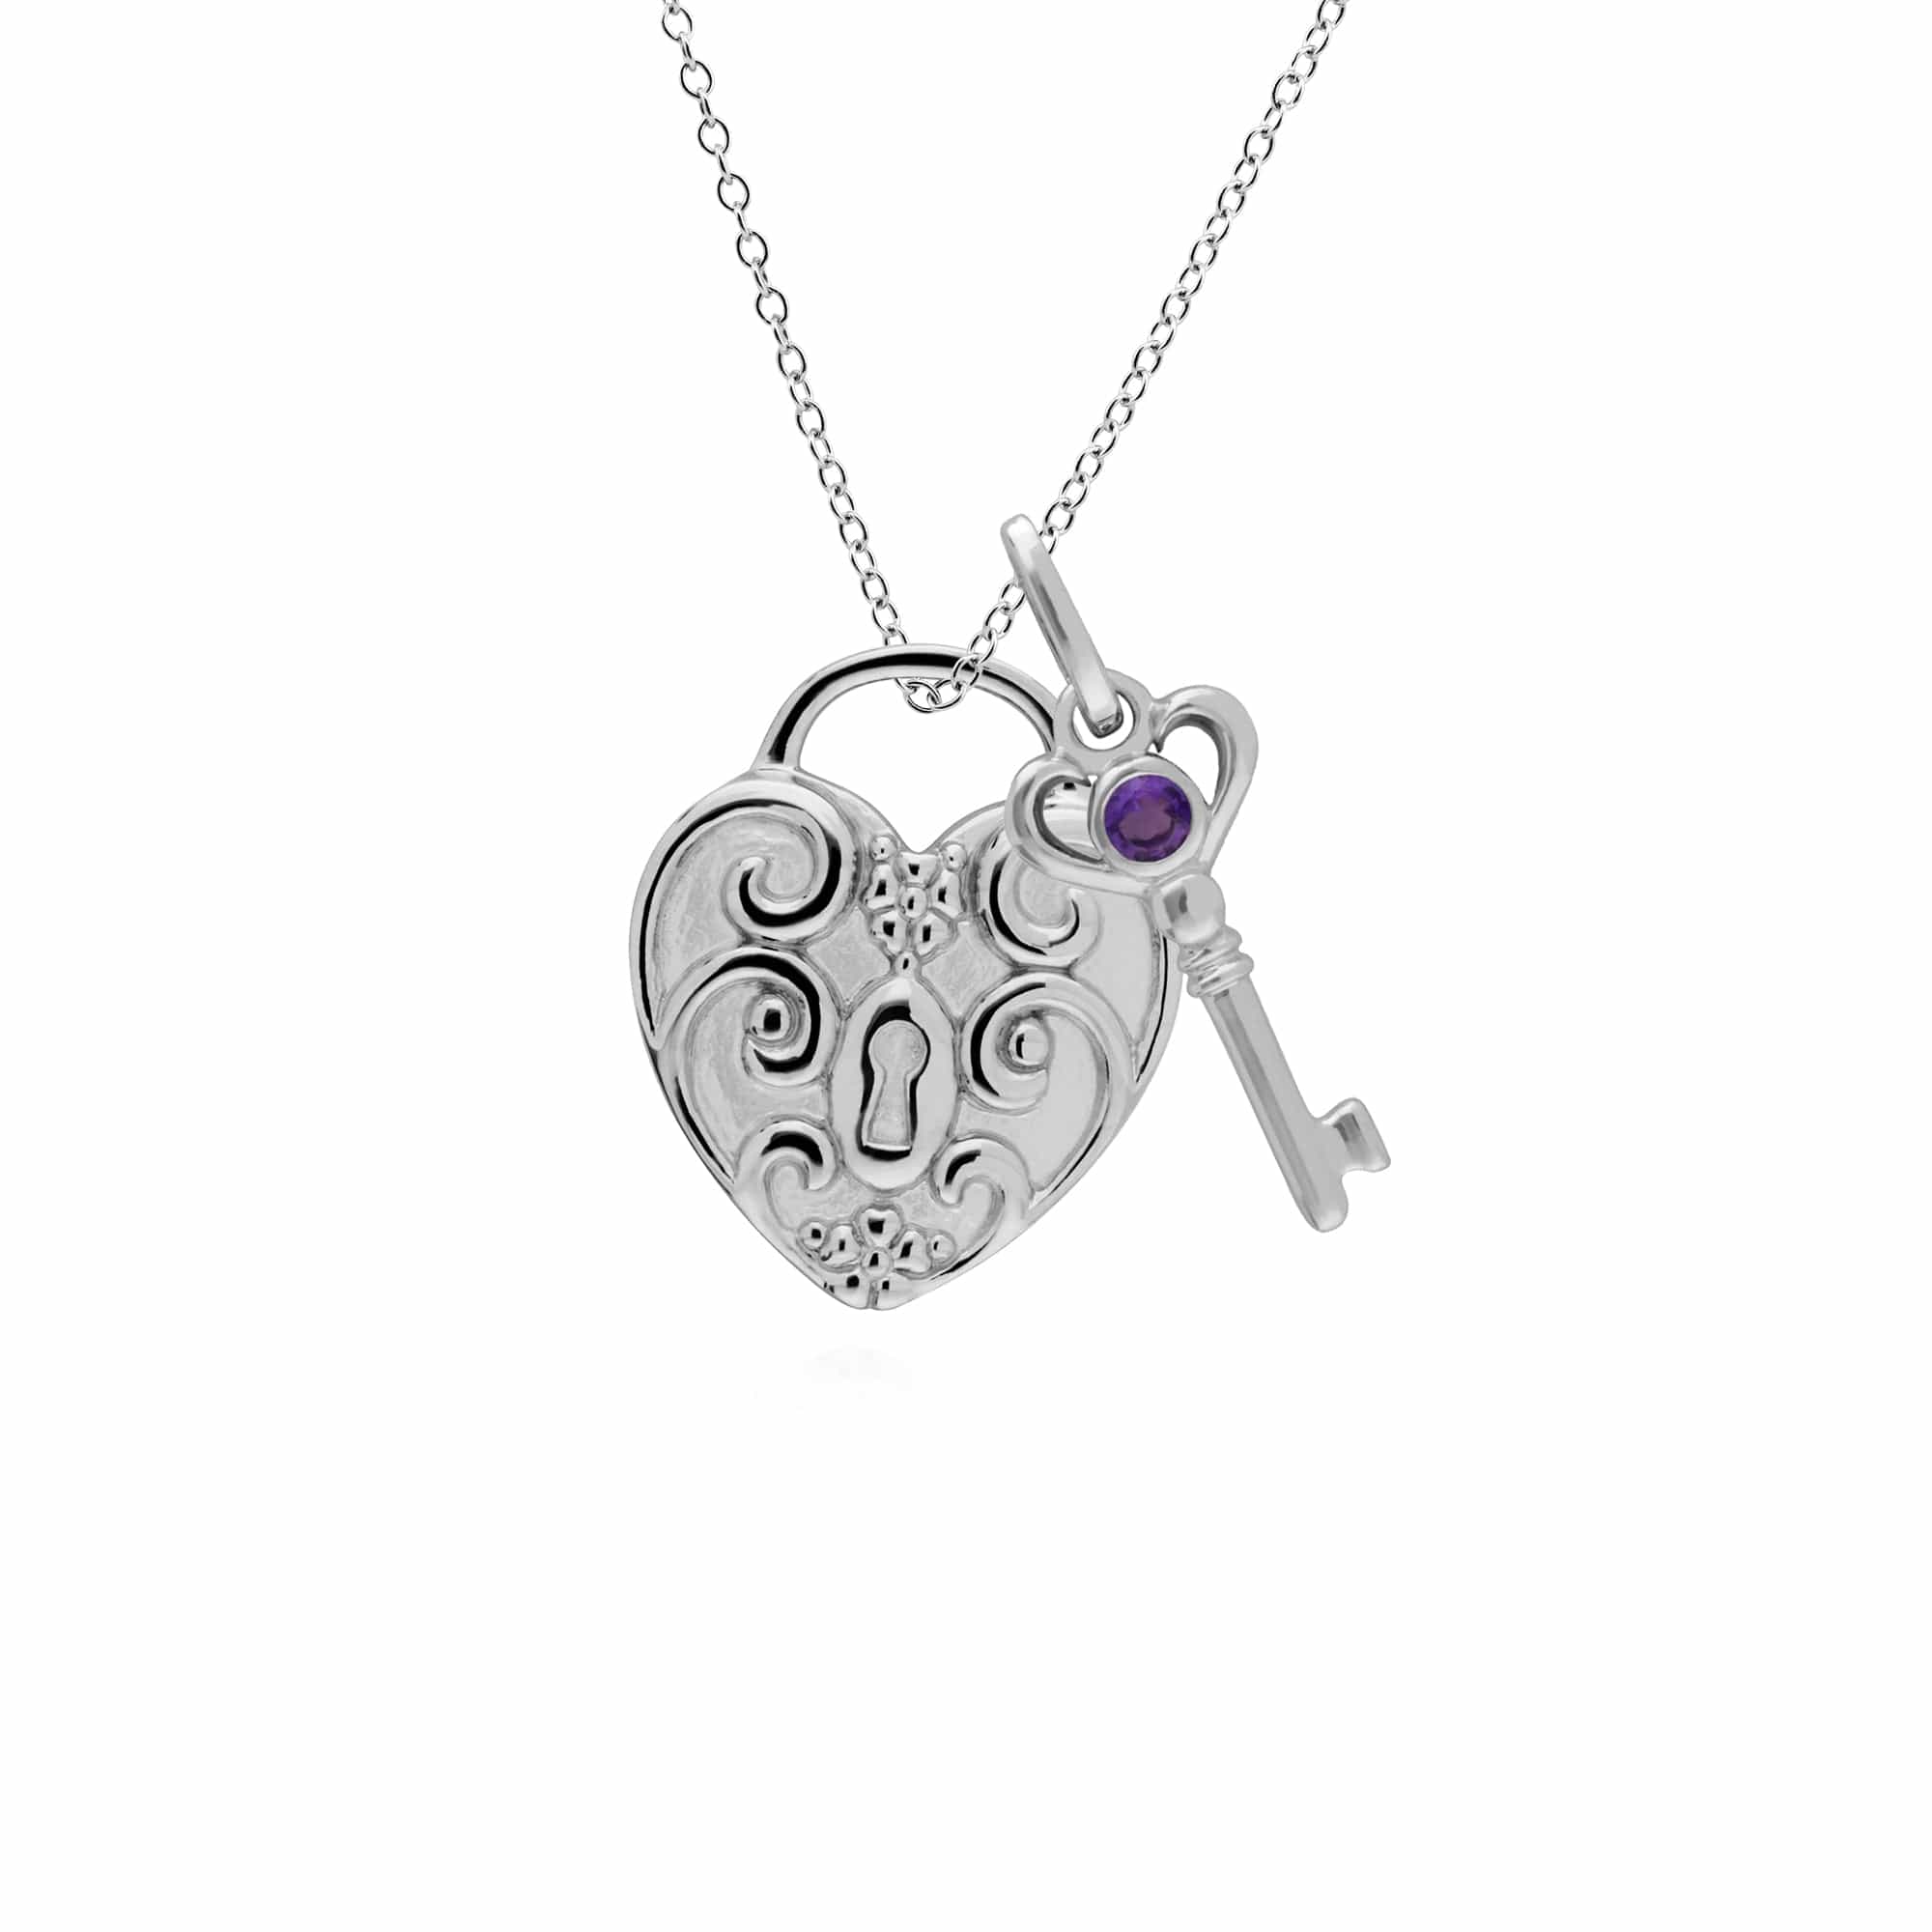 270P026404925-270P026601925 Classic Swirl Heart Lock Pendant & Amethyst Key Charm in 925 Sterling Silver 1